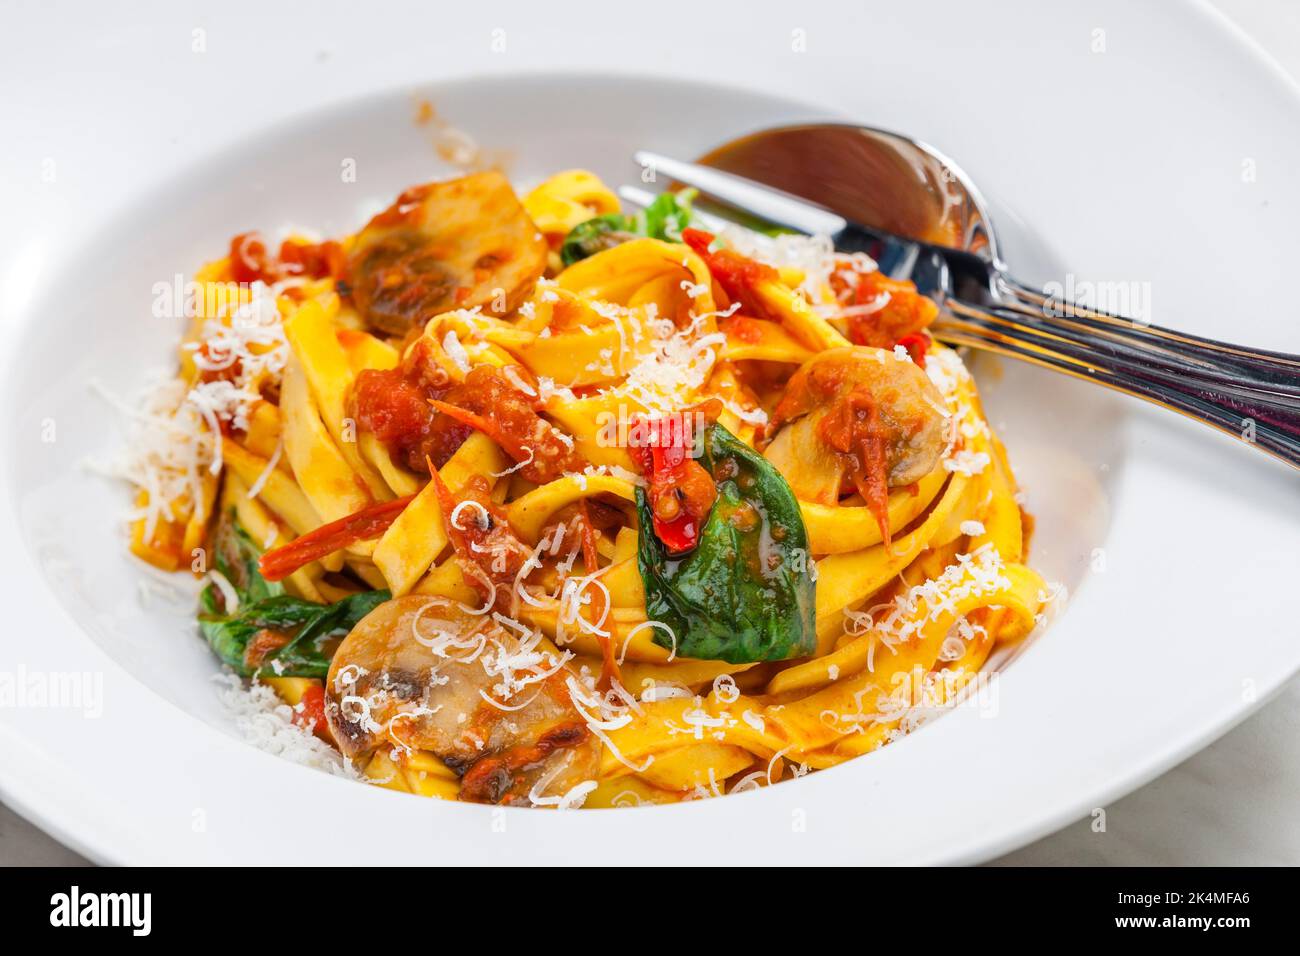 https://c8.alamy.com/comp/2K4MFA6/pasta-tagliatelle-with-tomato-saucechampignon-and-basil-leaves-2K4MFA6.jpg